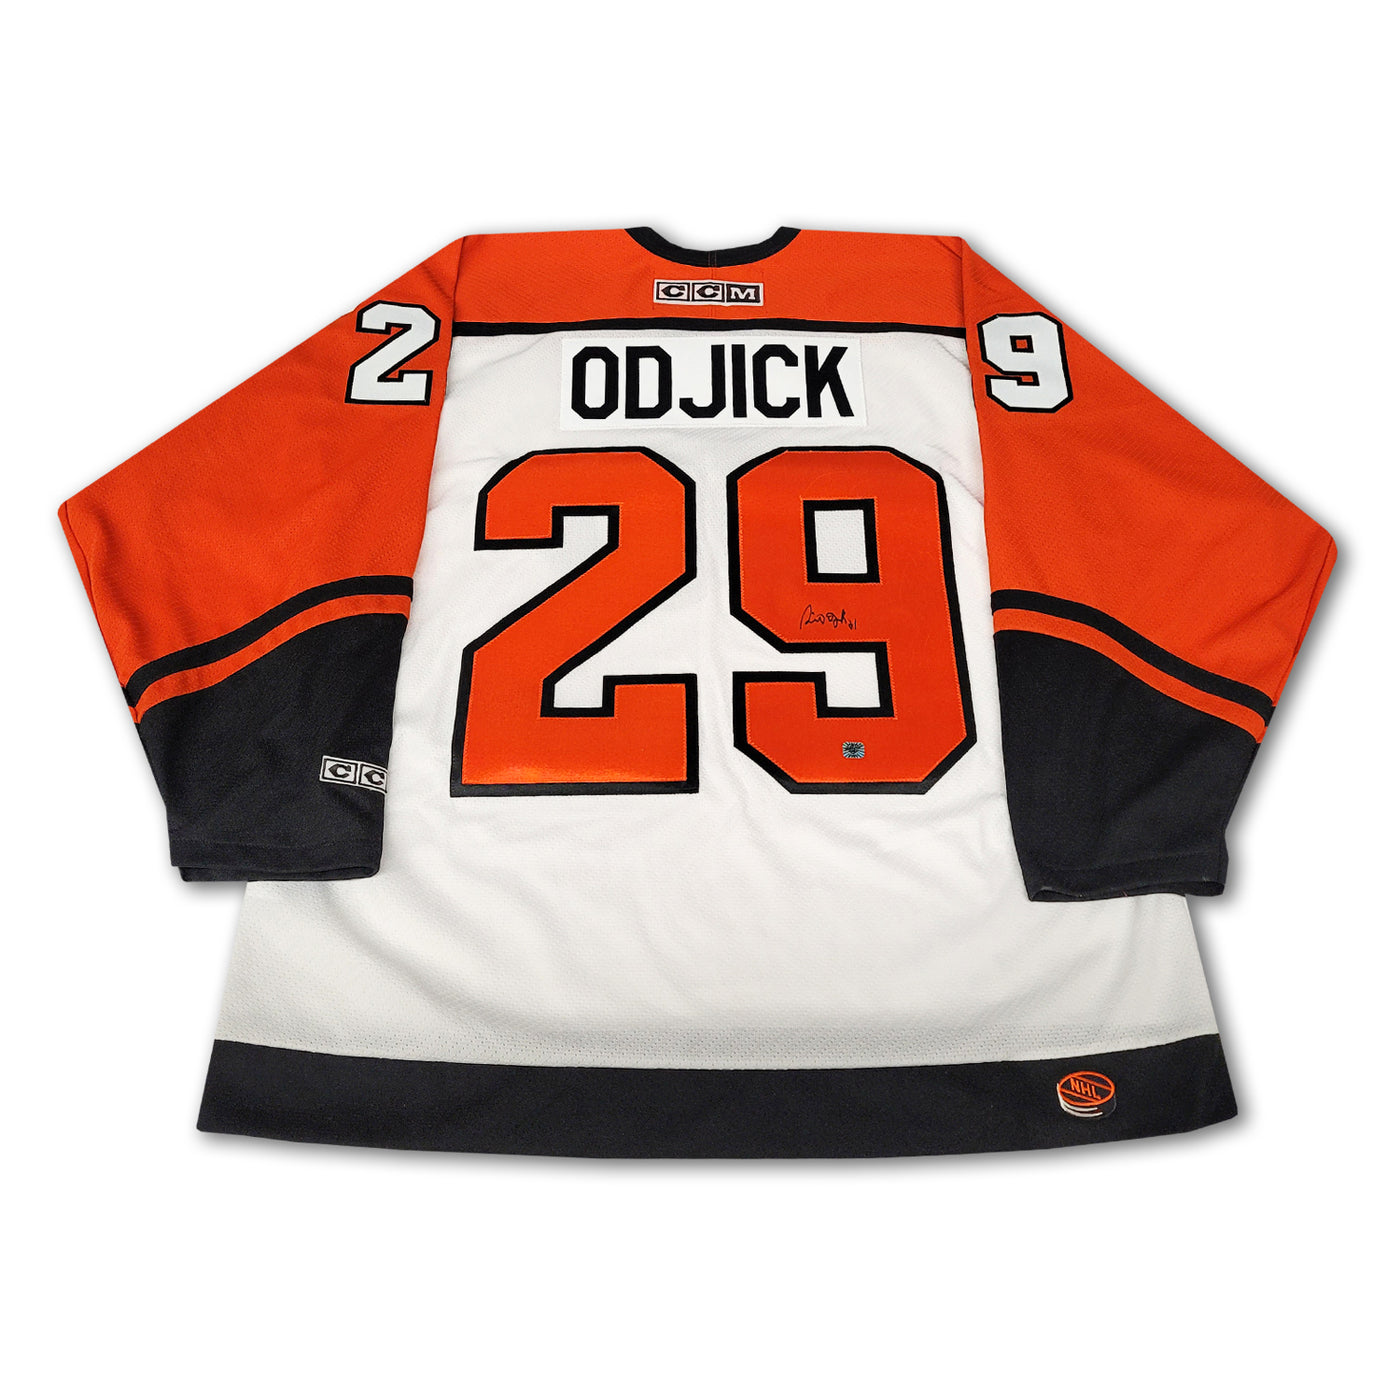 Gino Odjick Philadelphia Flyers White/Orange CCM Jersey